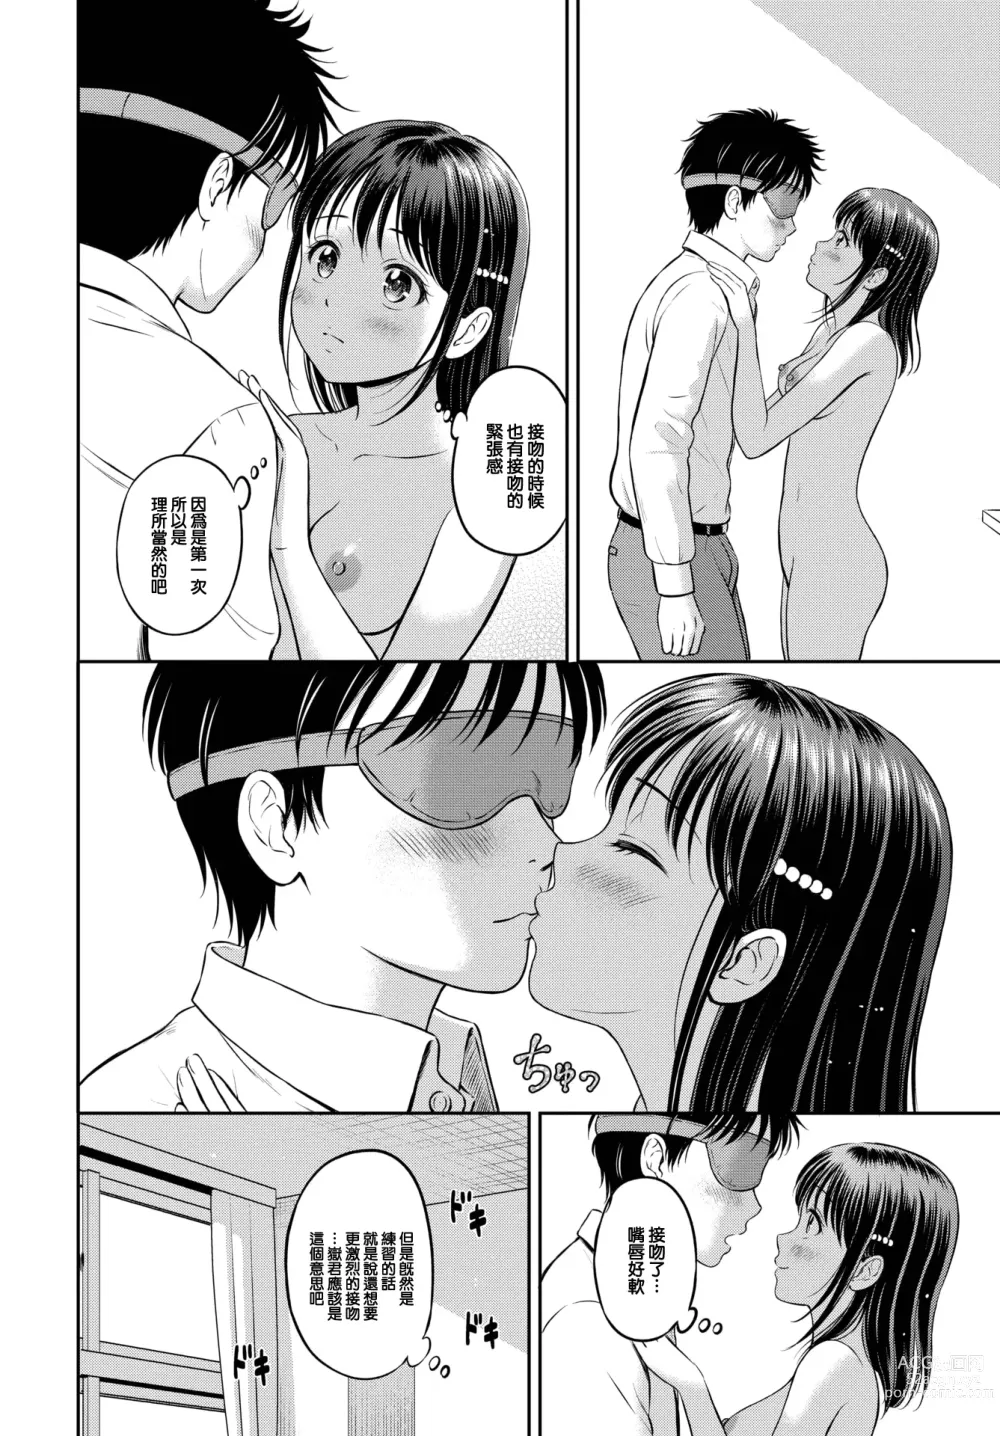 Page 7 of manga Kawari ni Narimasu - Im going to take her place. -Kouhen-